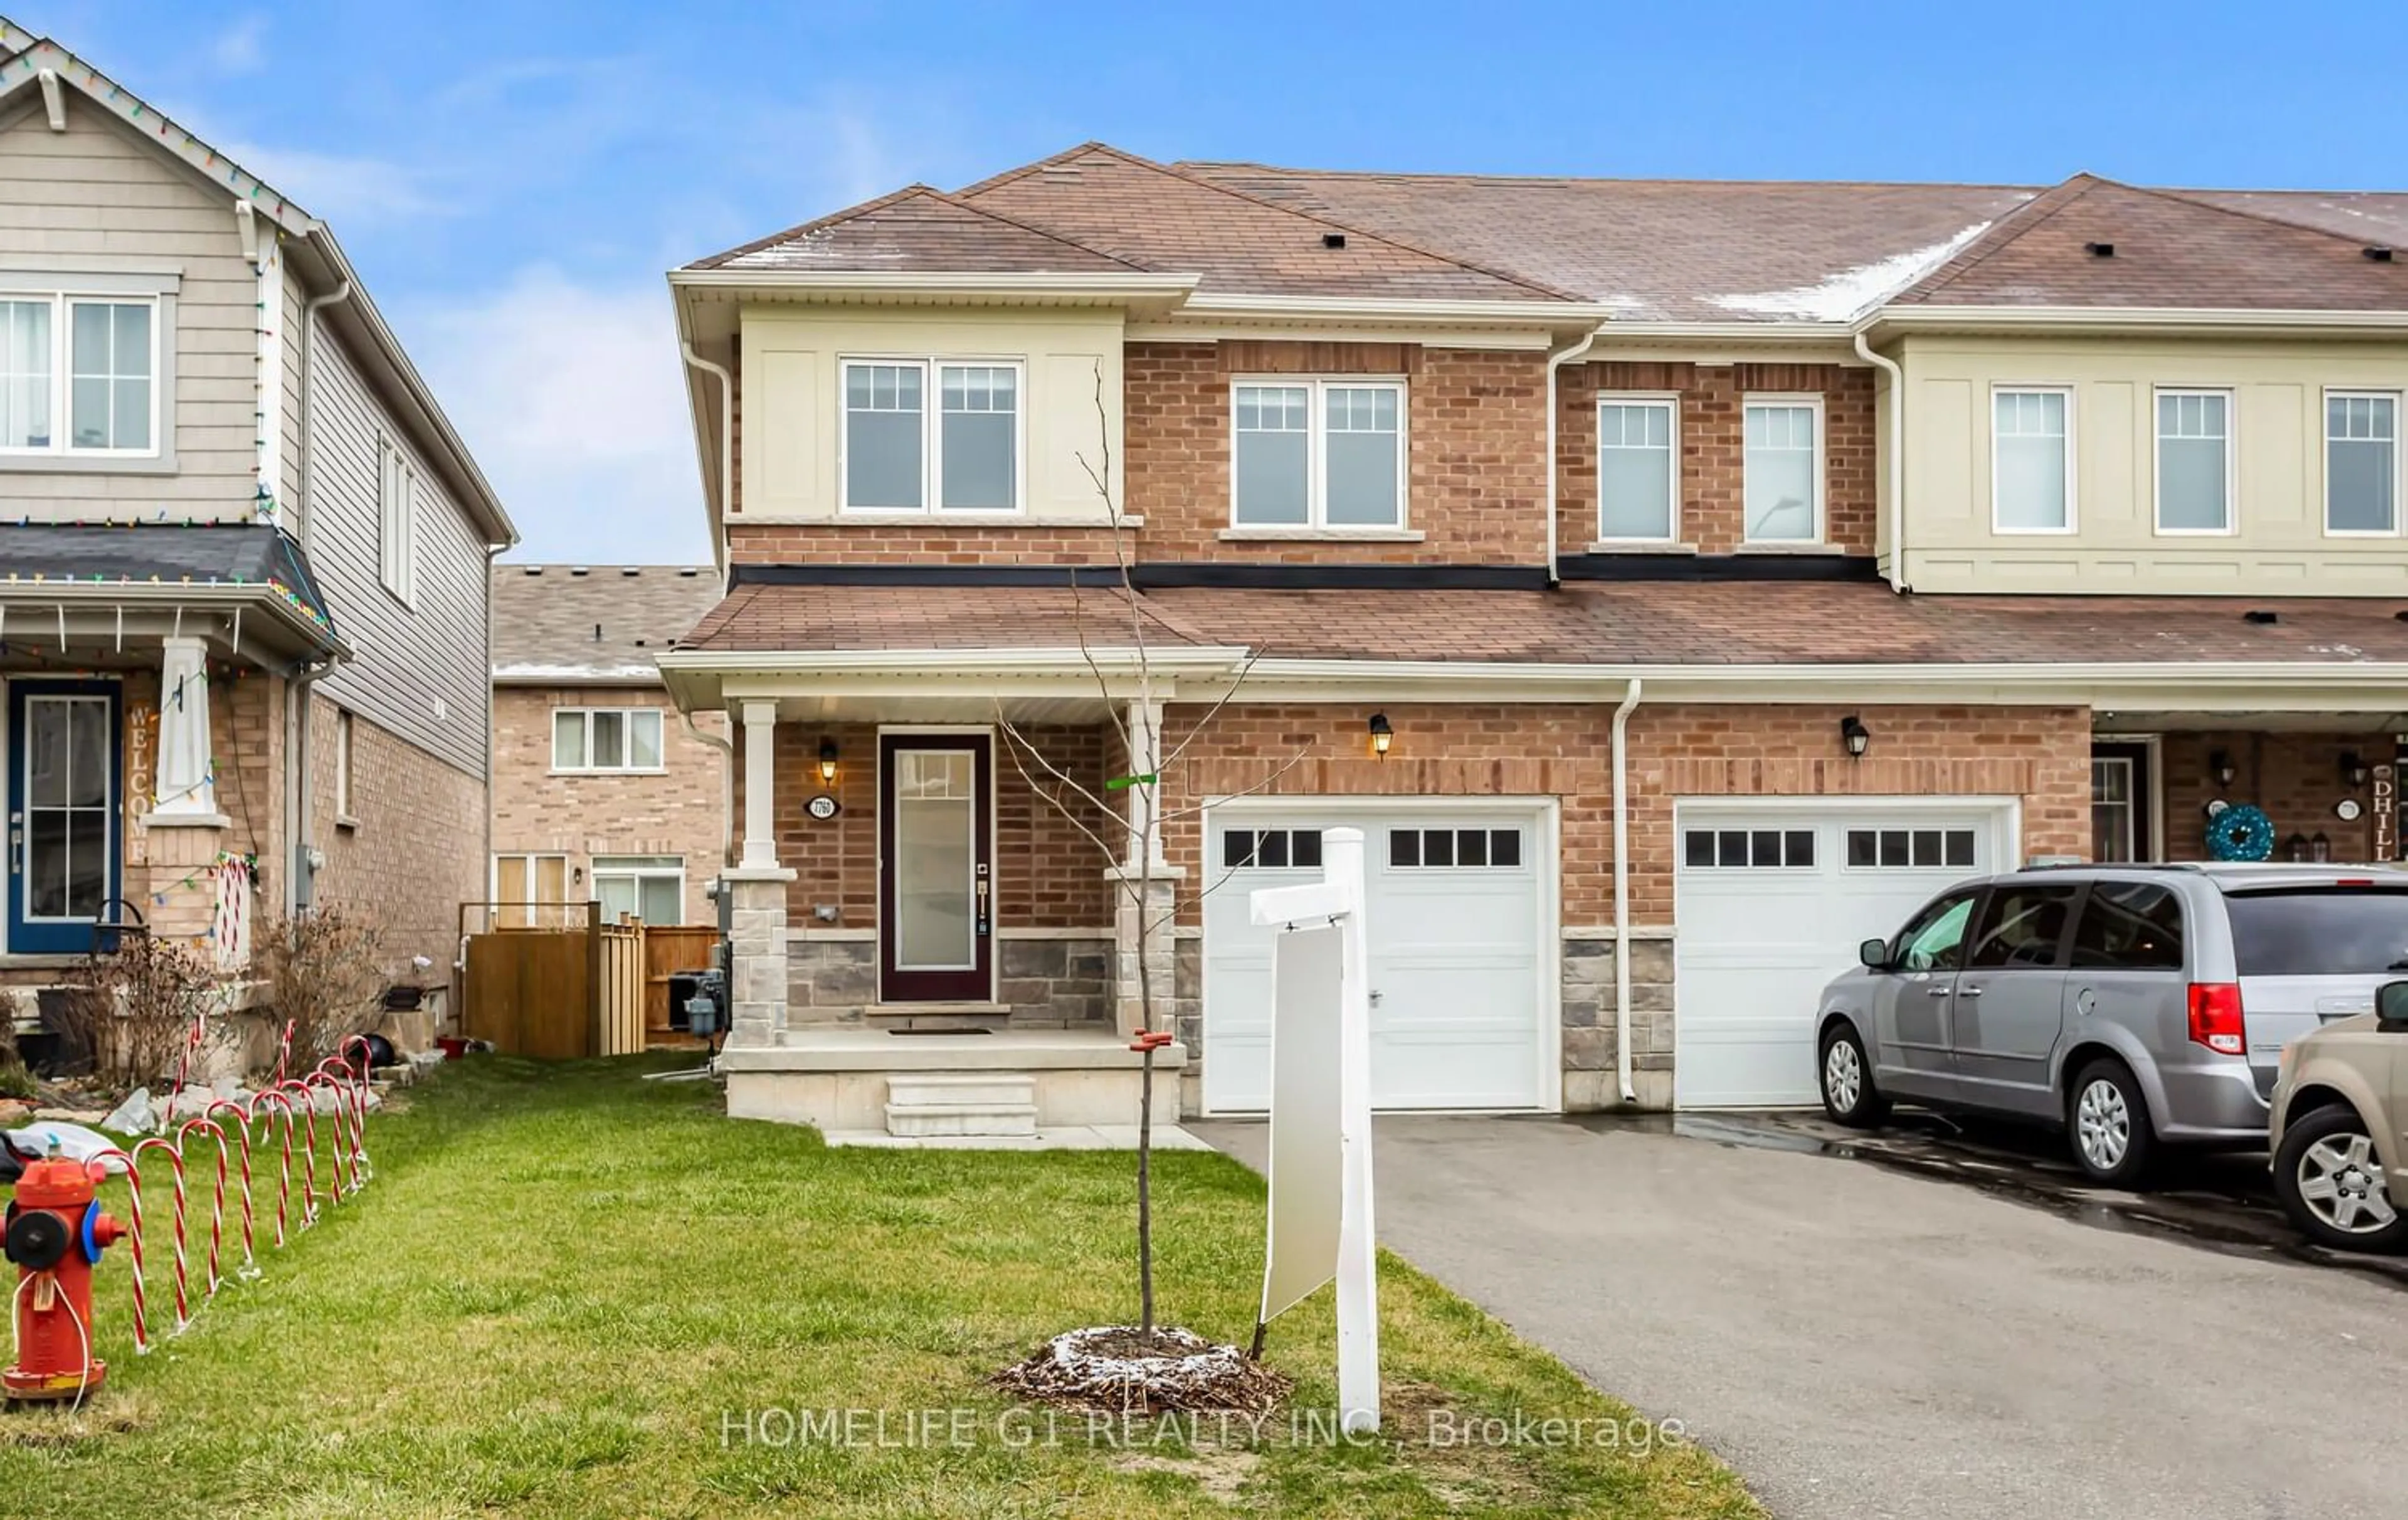 Home with brick exterior material for 7760 Redbud Lane, Niagara Falls Ontario L2H 3R9